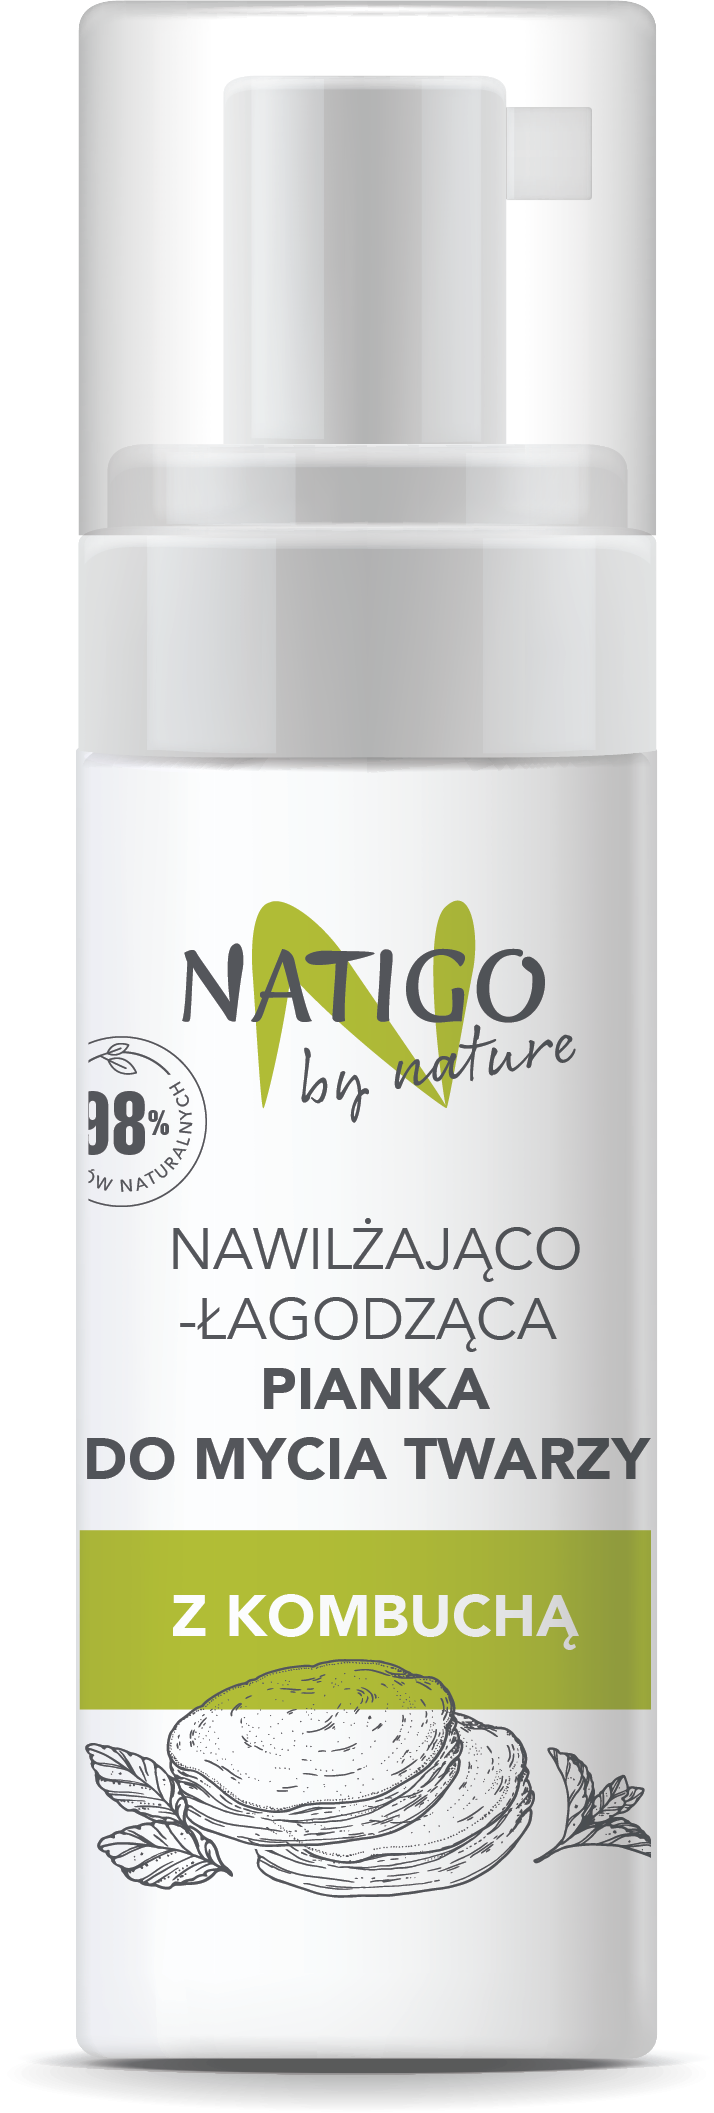 NATIGO BY NATURE - Spuma curatare faciala hidratanta si calmanta cu extract de Kombucha - 98% natural ingredients, 150ml